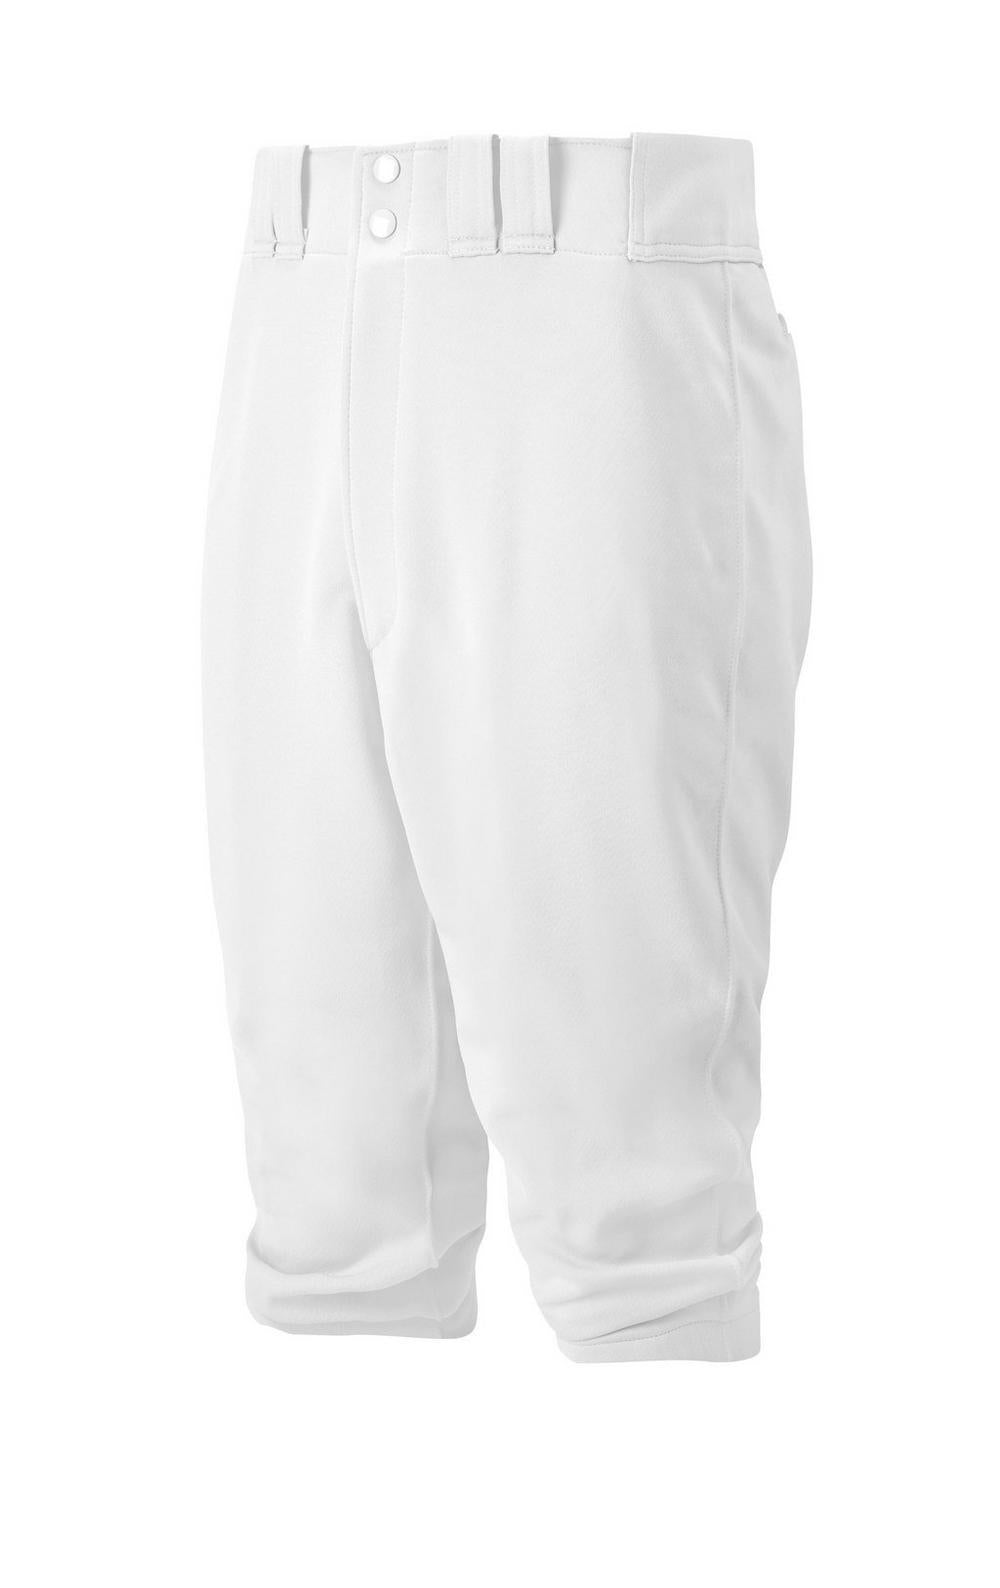 Mizuno Premier Youth Short Pant - White (350312)